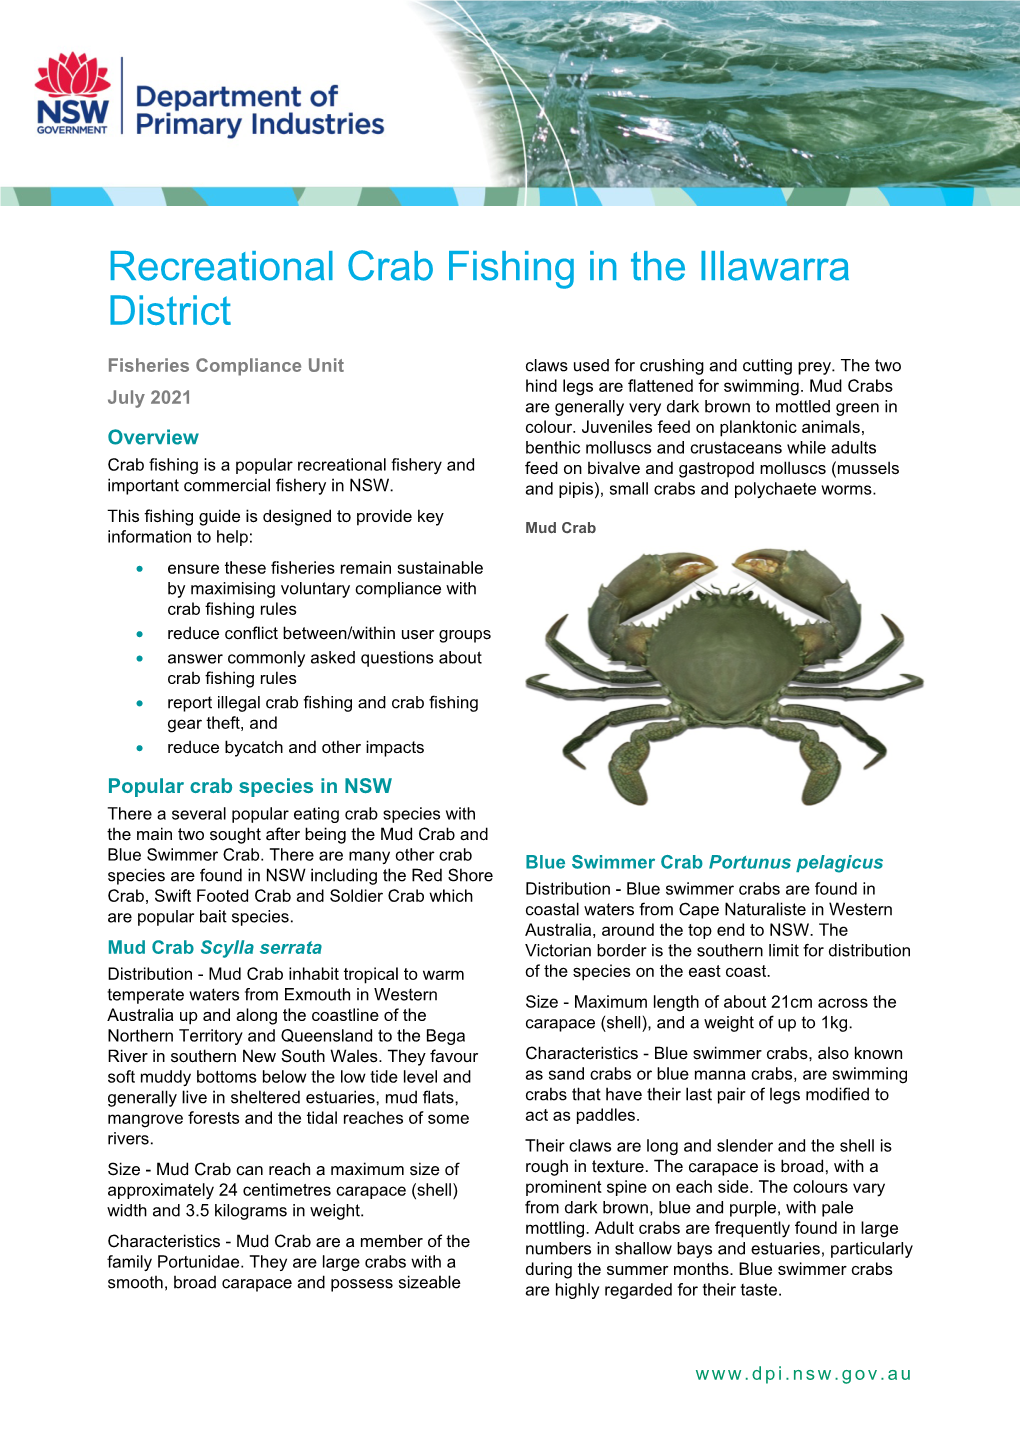 Recreational Crab Fishing in Illawarra District